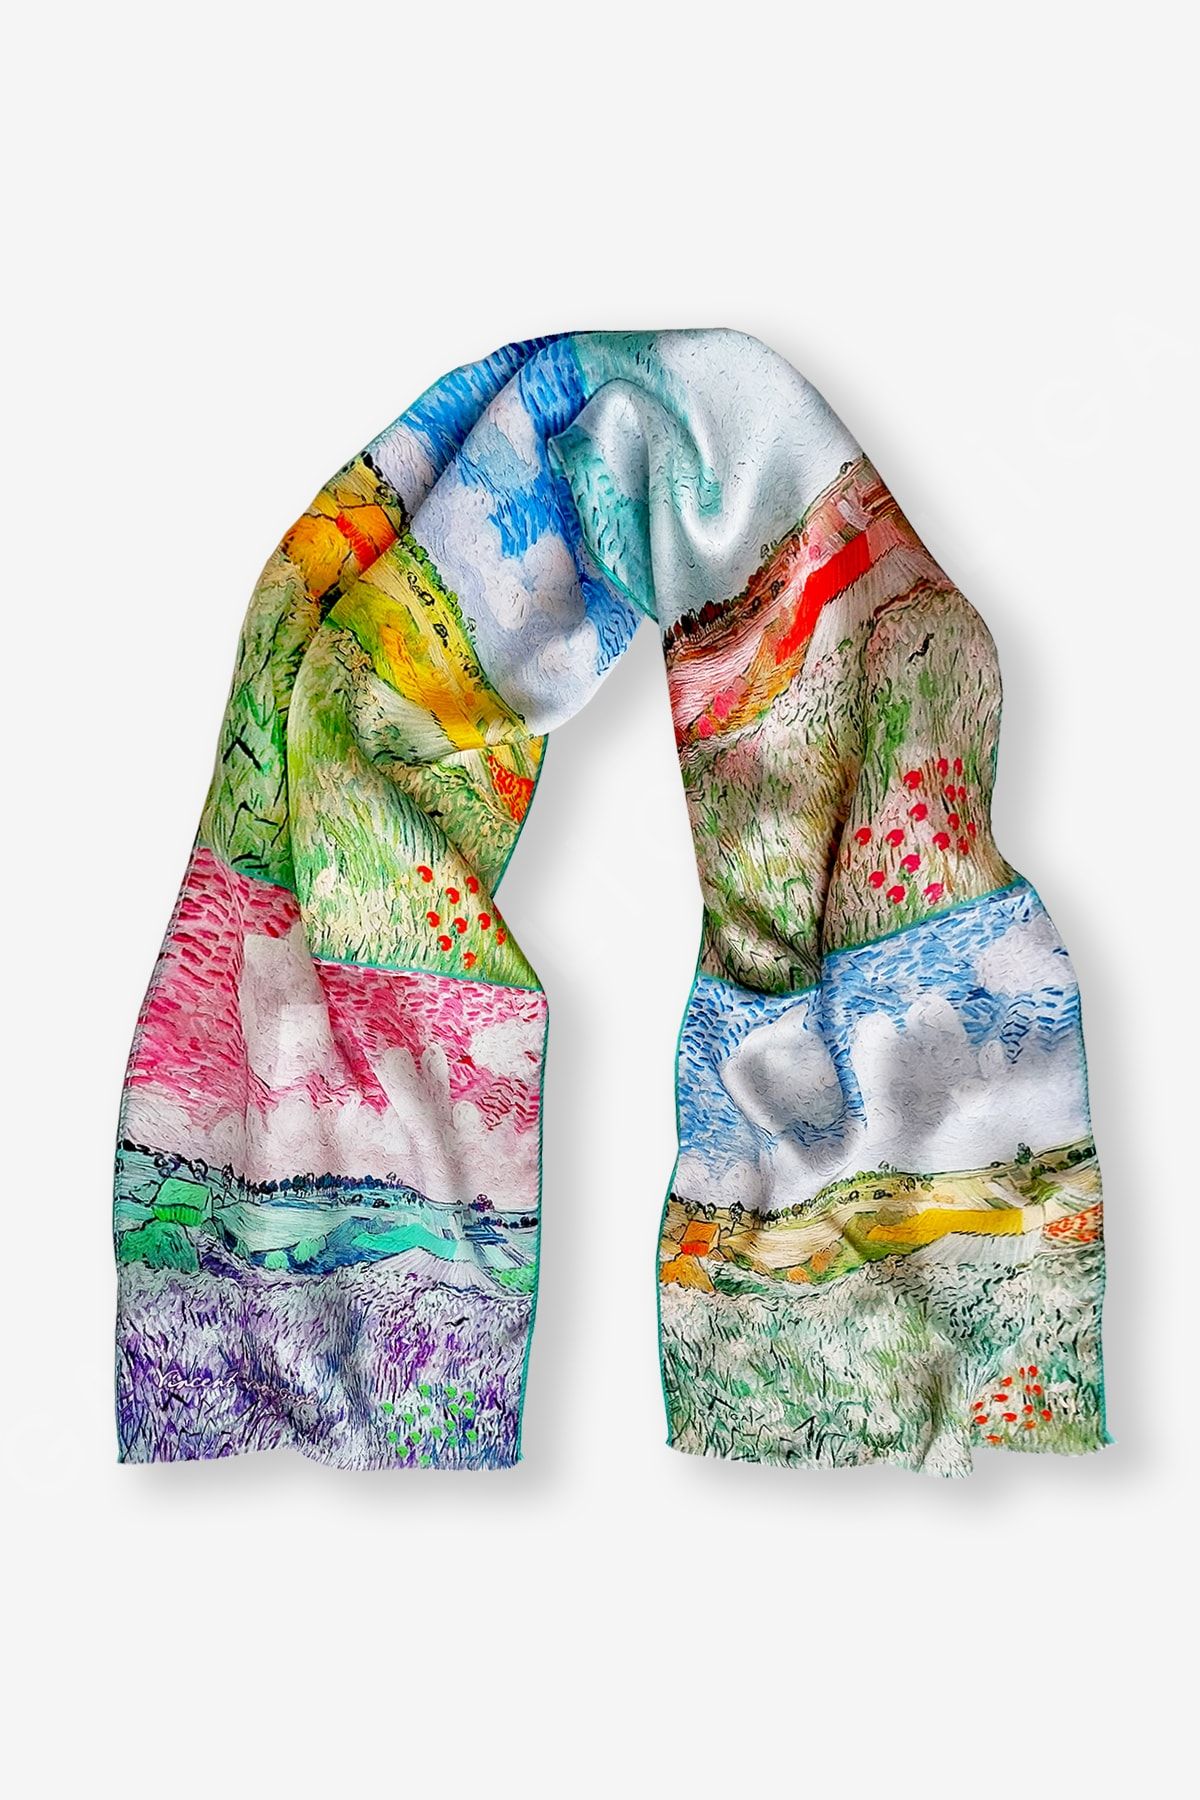 Galiga Van Gogh-plain %100 Ipek Fular 26*130cm 'art On Silk'